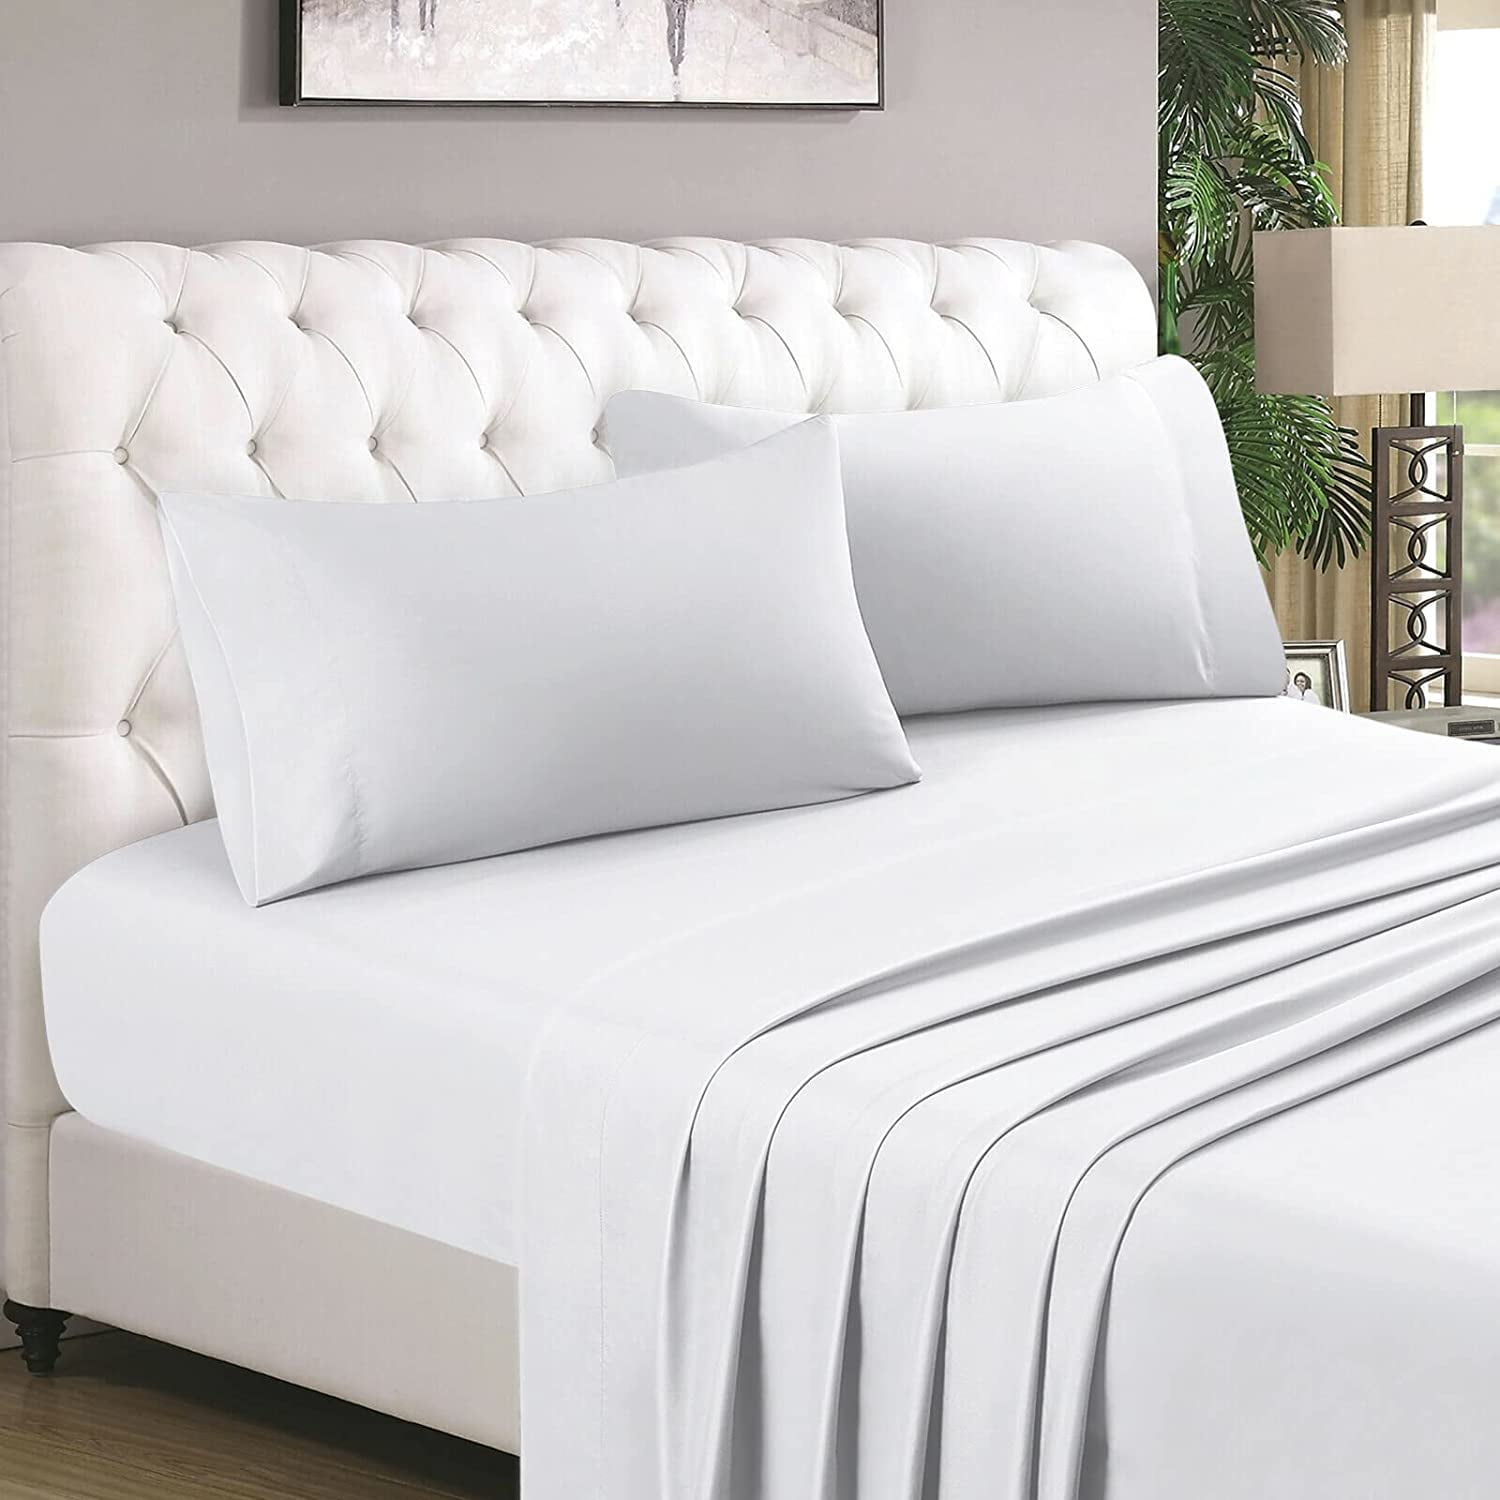 4-Pc Sheet Set includes Fitted Sheet,Flat Sheet,Pillow Case Cotton Rich Bed Set 